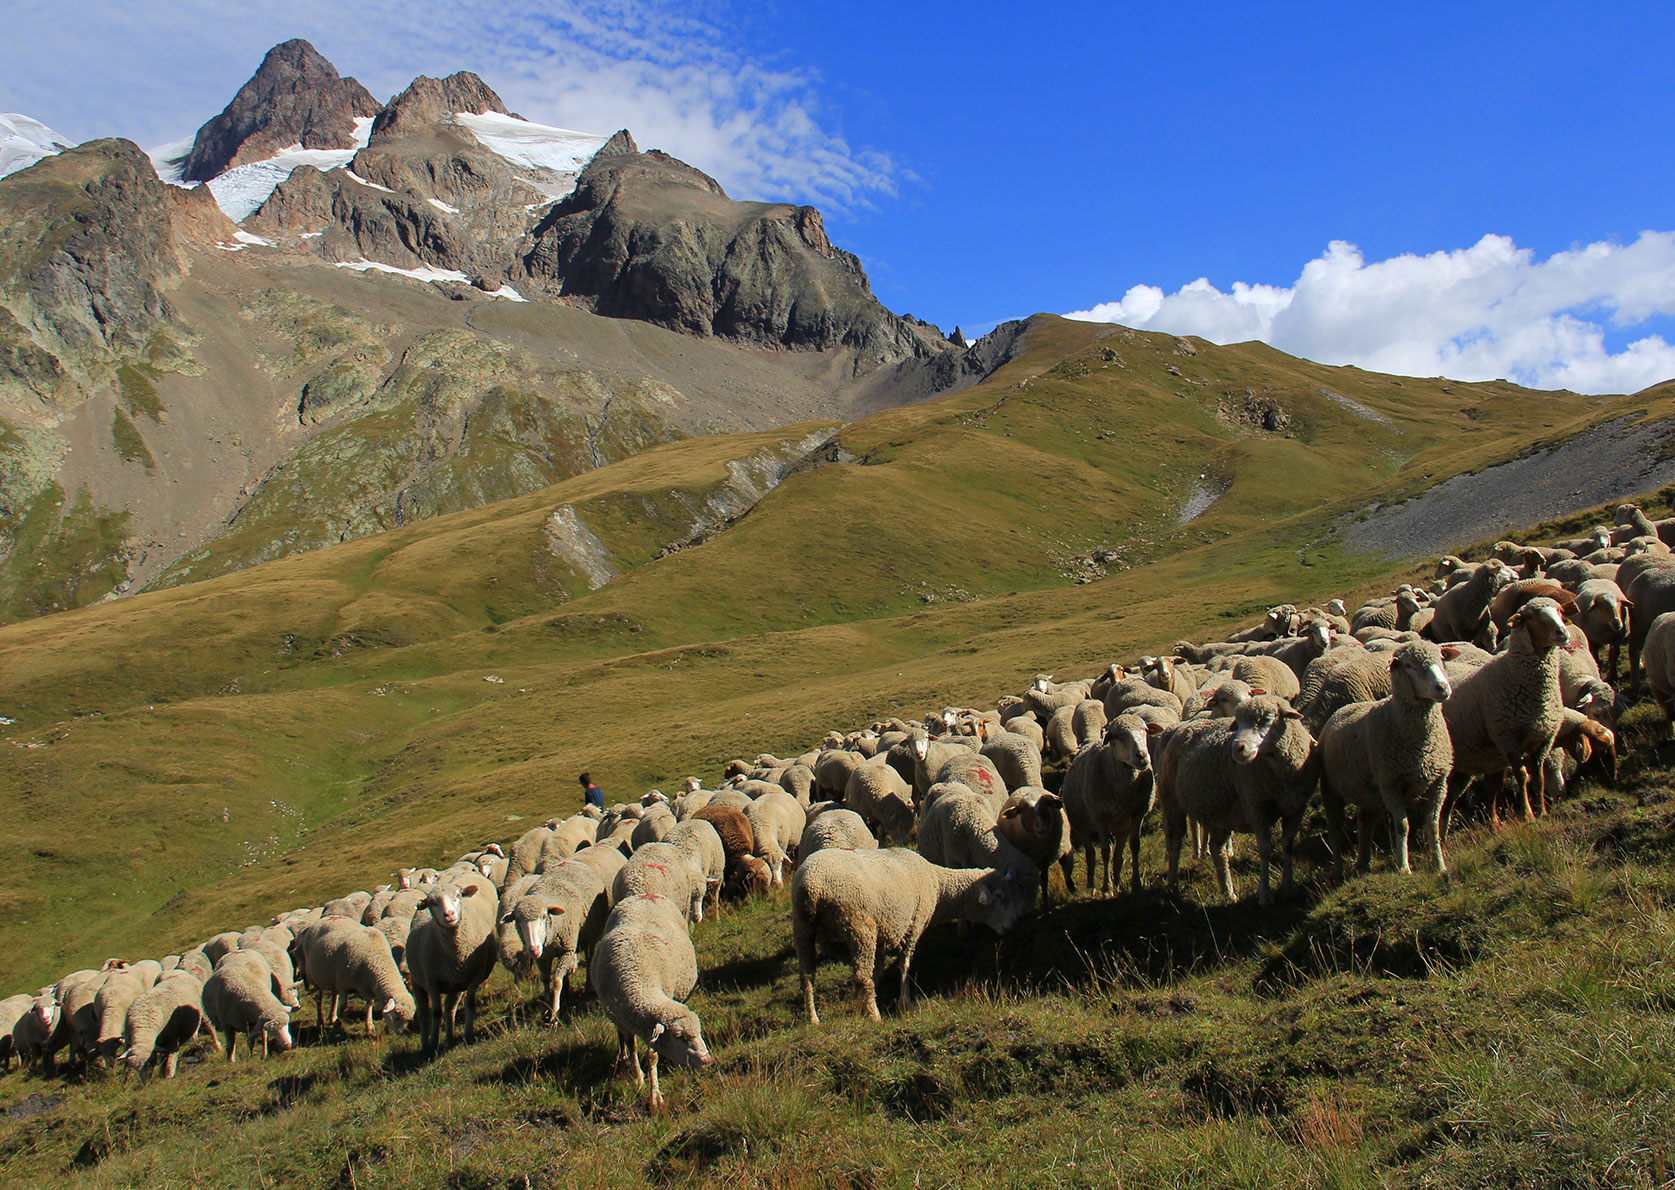 Long-distance hiking trails Alps Tour du Mont Blanc flock of sheep on a mountain pasture